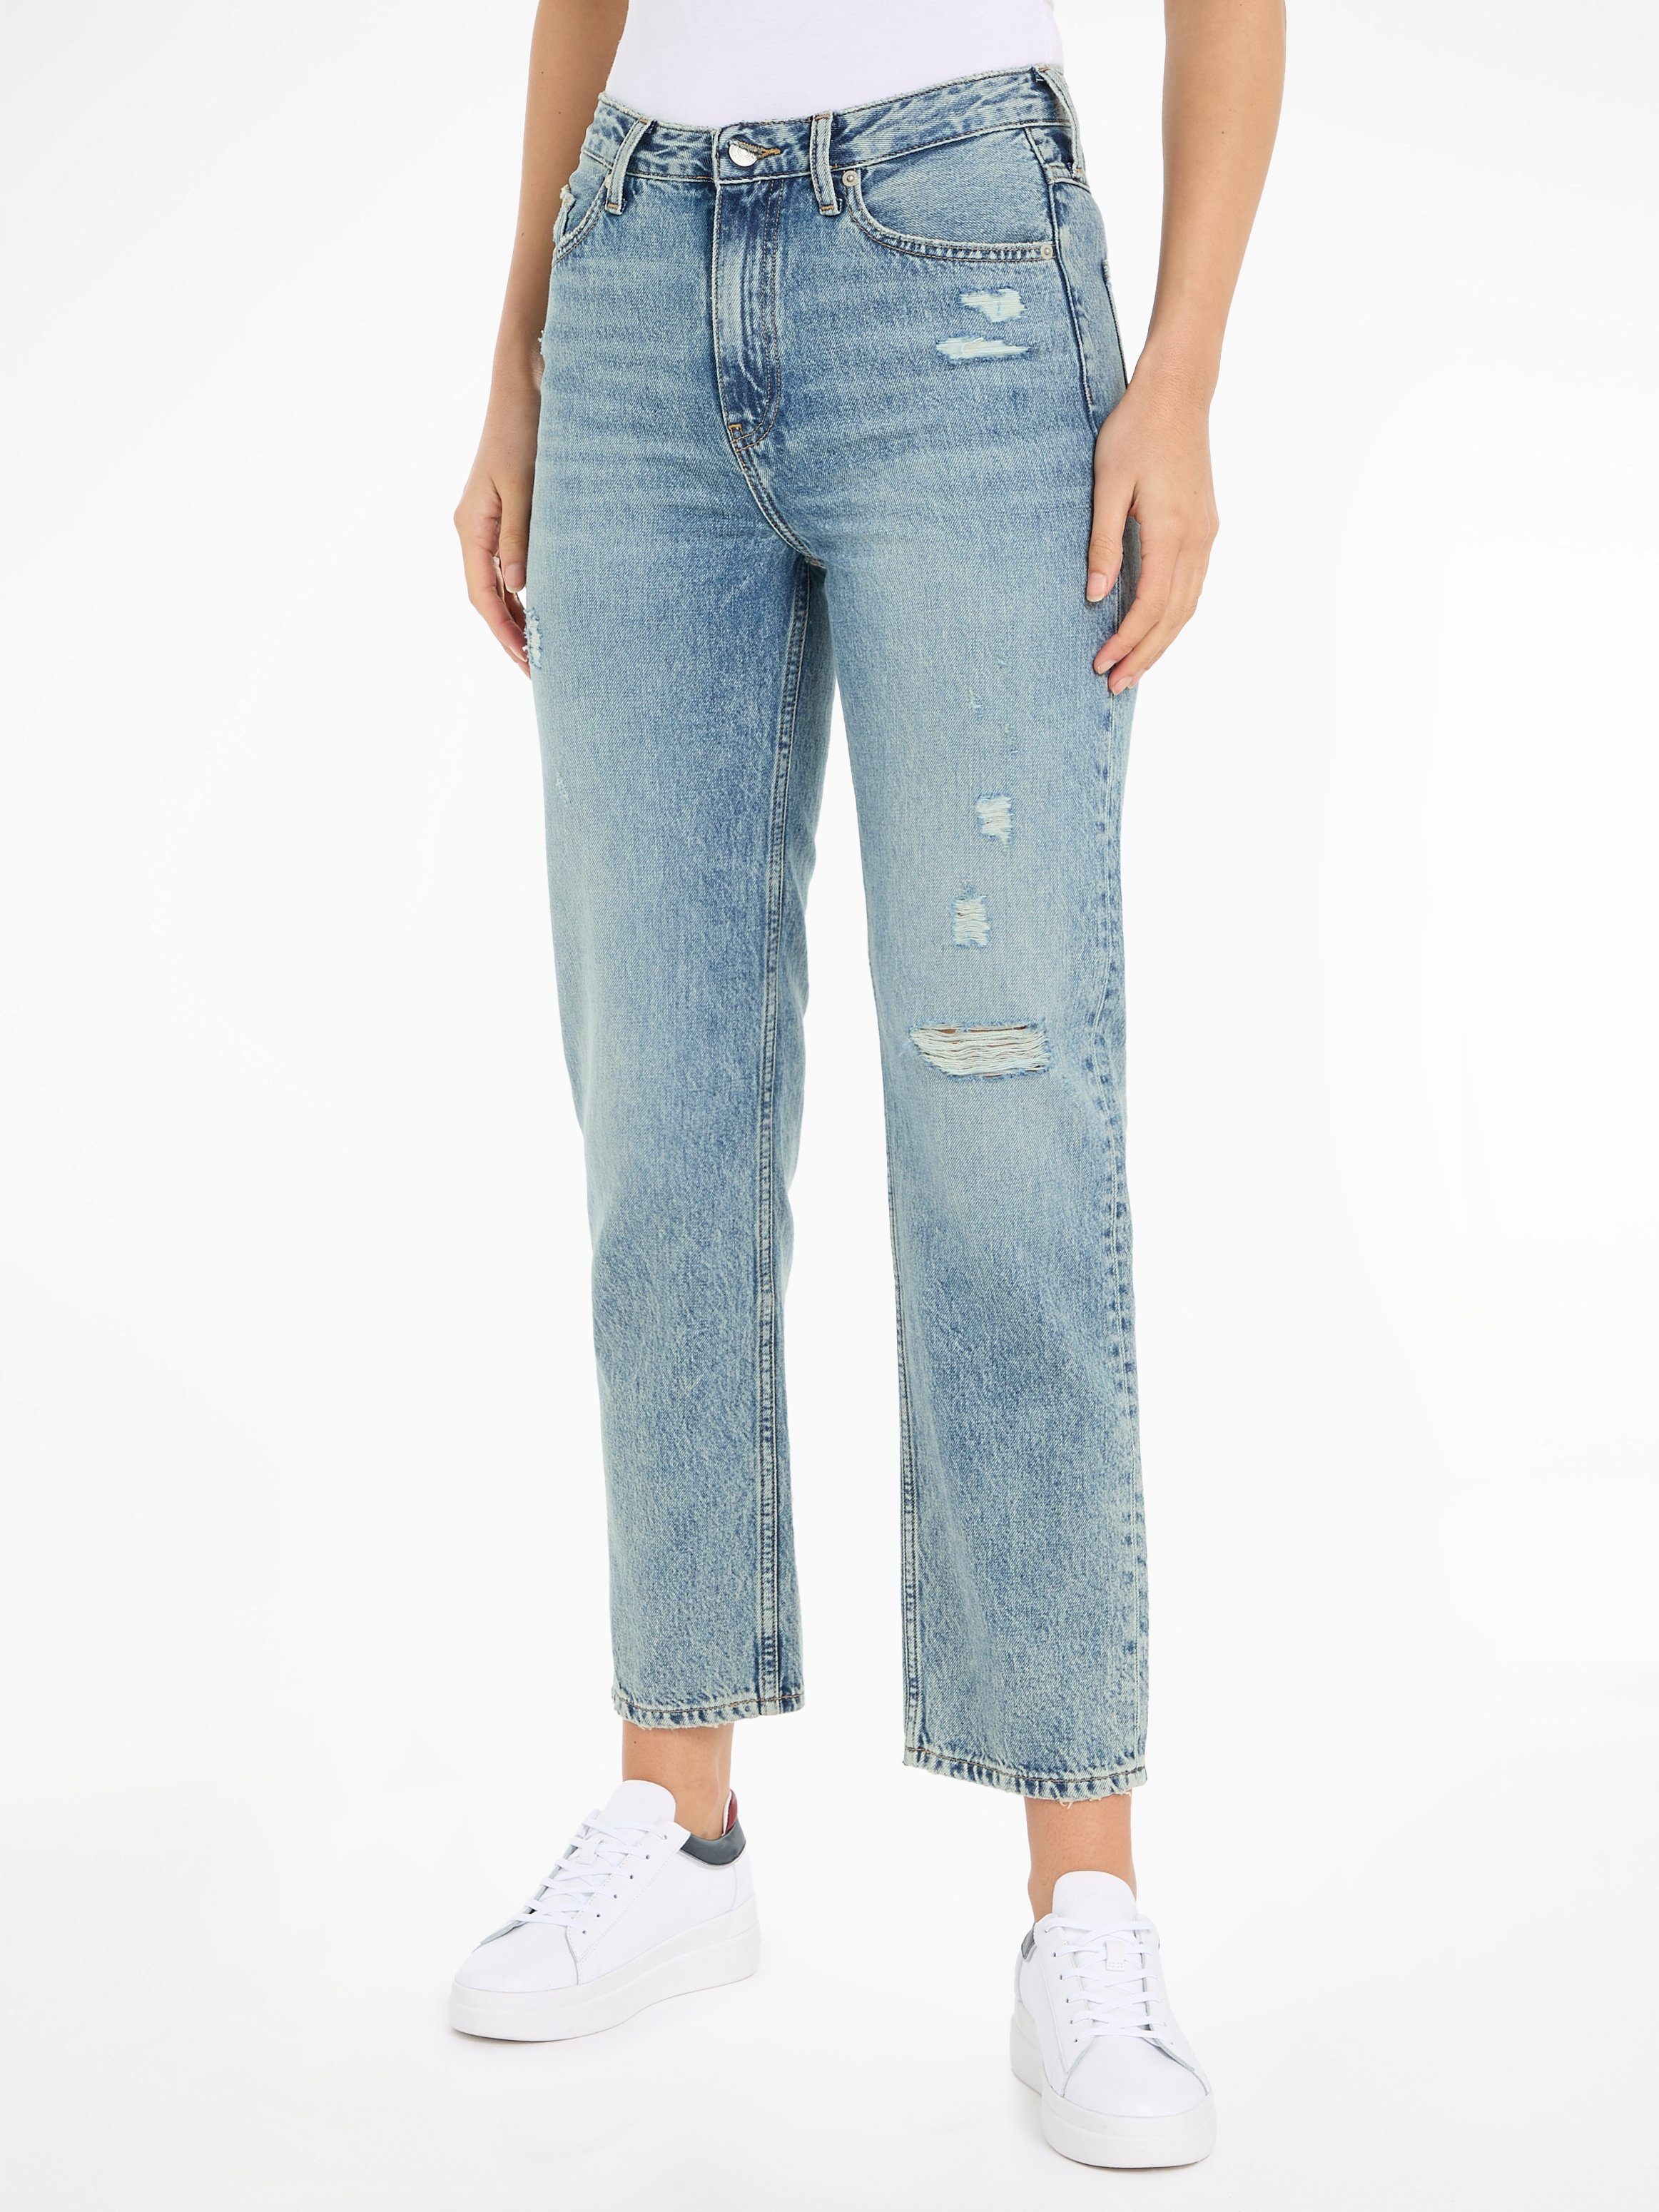 MIO A Logostickerei CLASSIC WRN STRAIGHT Tommy Hilfiger mit Straight-Jeans HW